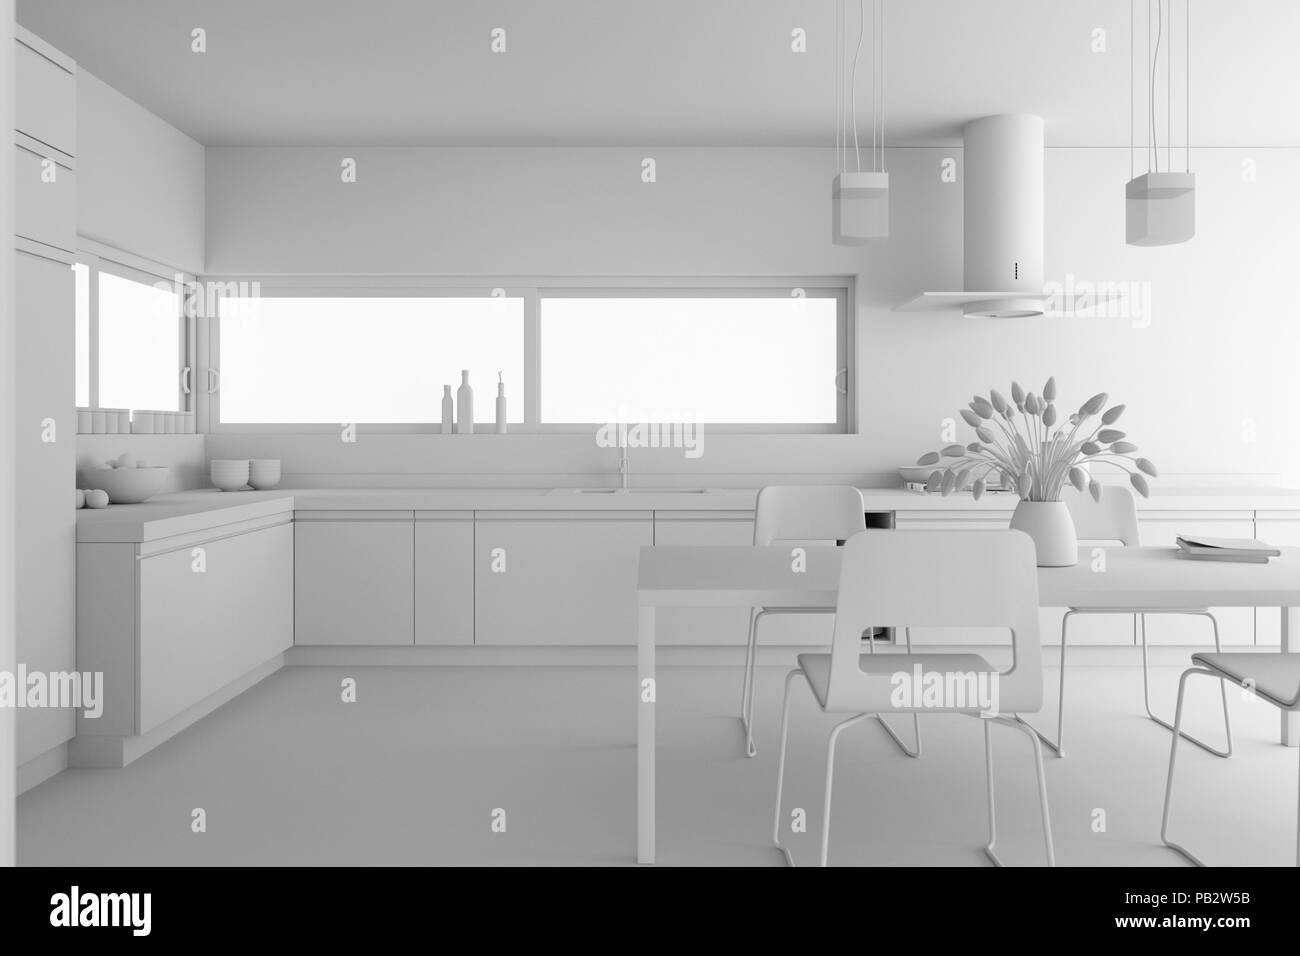 Interior design modern kitchen model Stock Photo